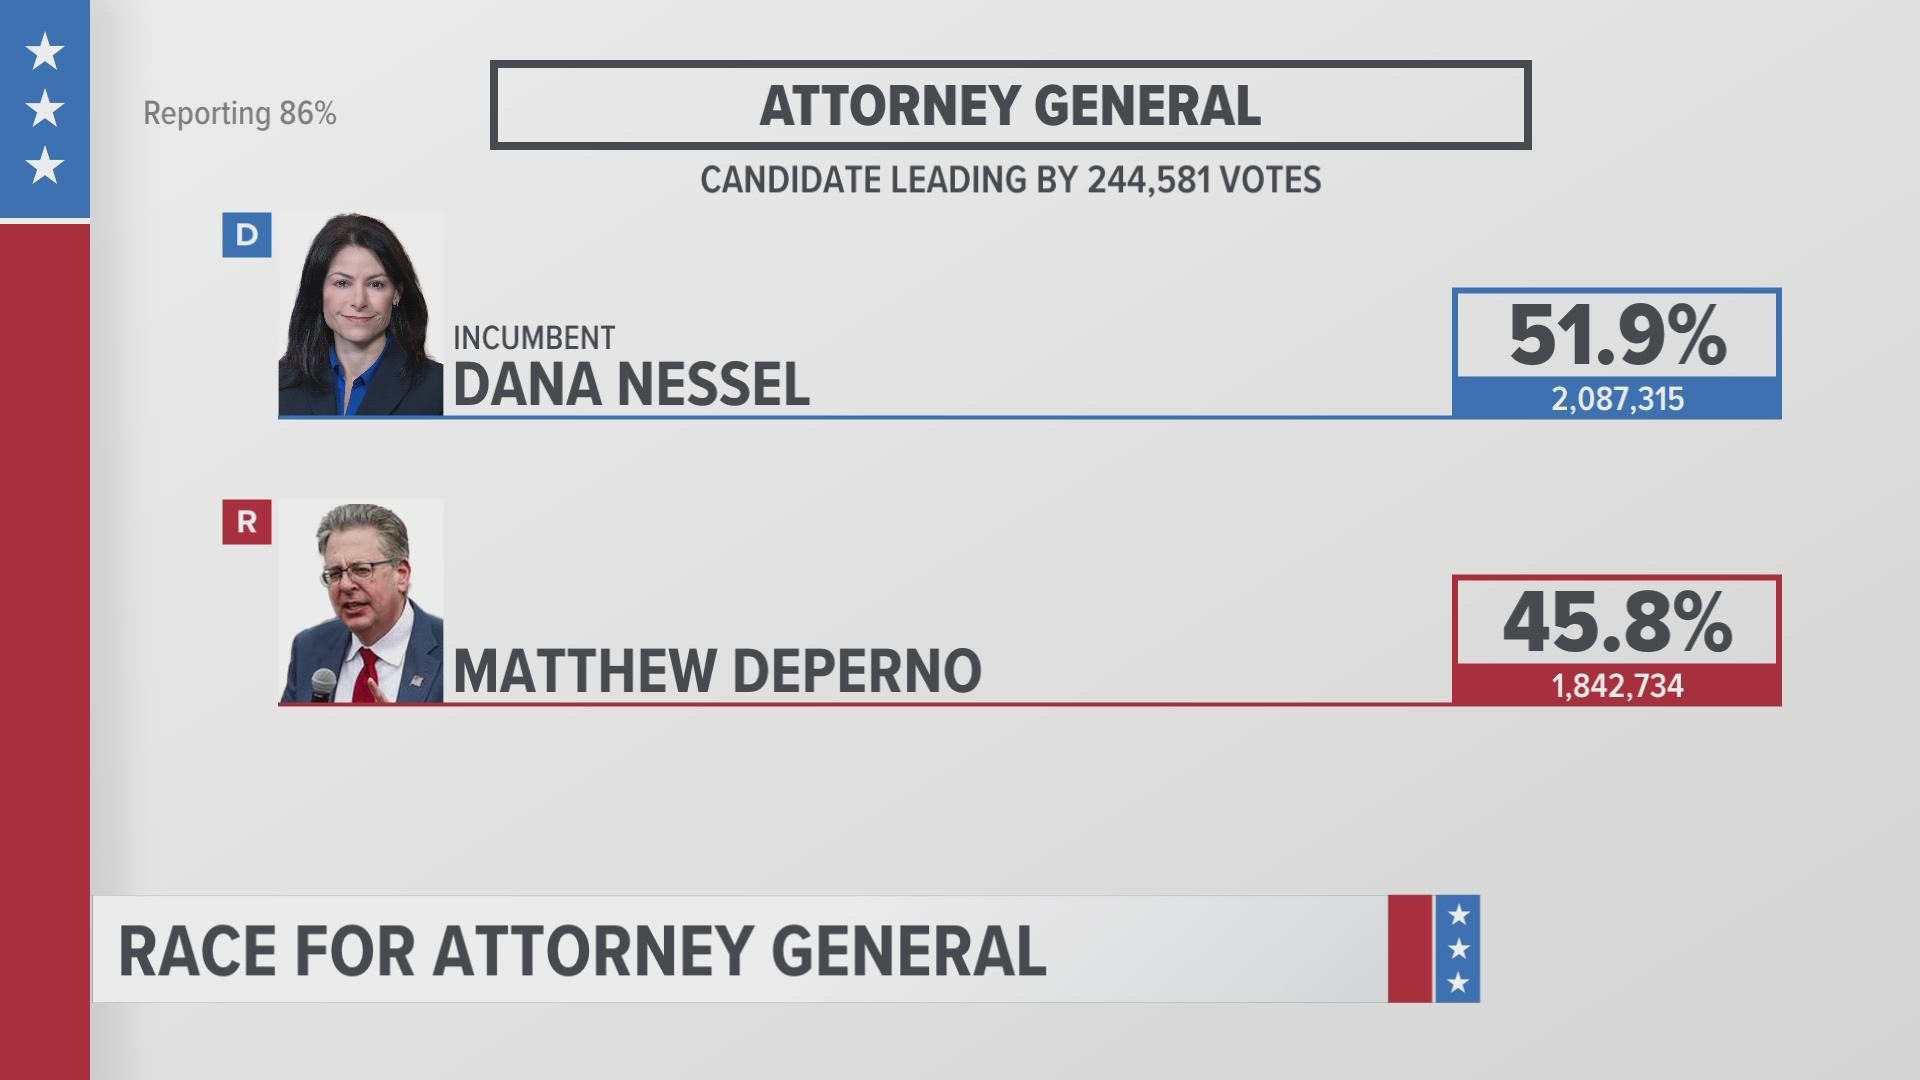 Democrat Jocelyn Benson is projected to win against Republican Kristina Karamo, and Democrat Dana Nessel is currently in the lead against Republican Matt DePerno.